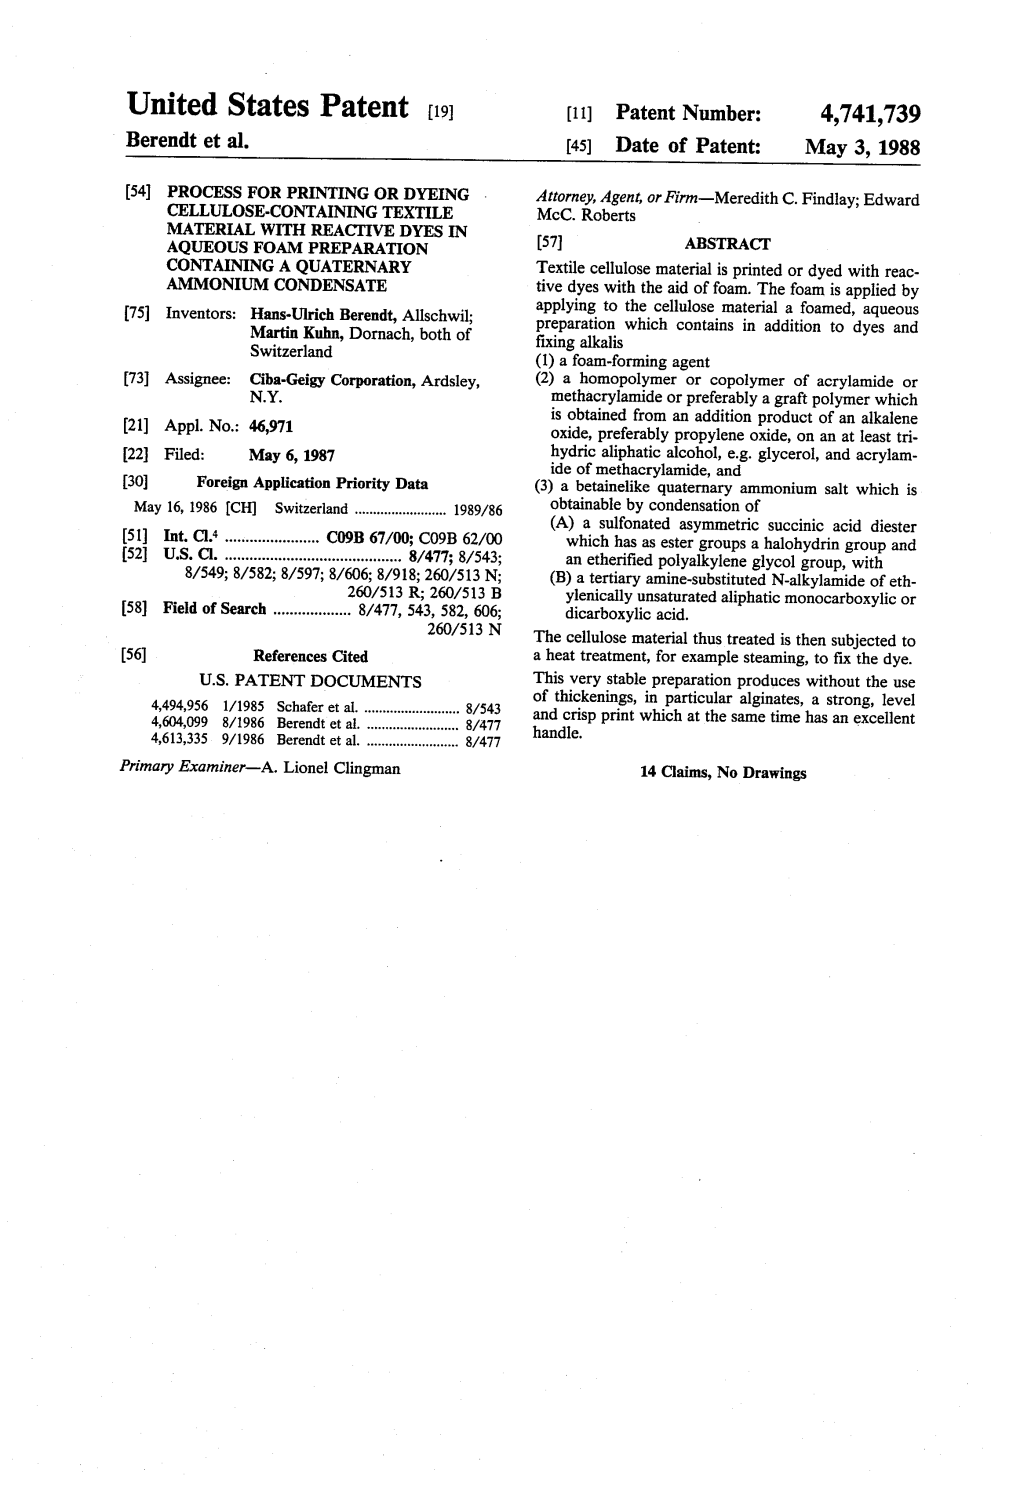 United States Patent (19) (11) Patent Number: 4,741,739 Berendt Et Al